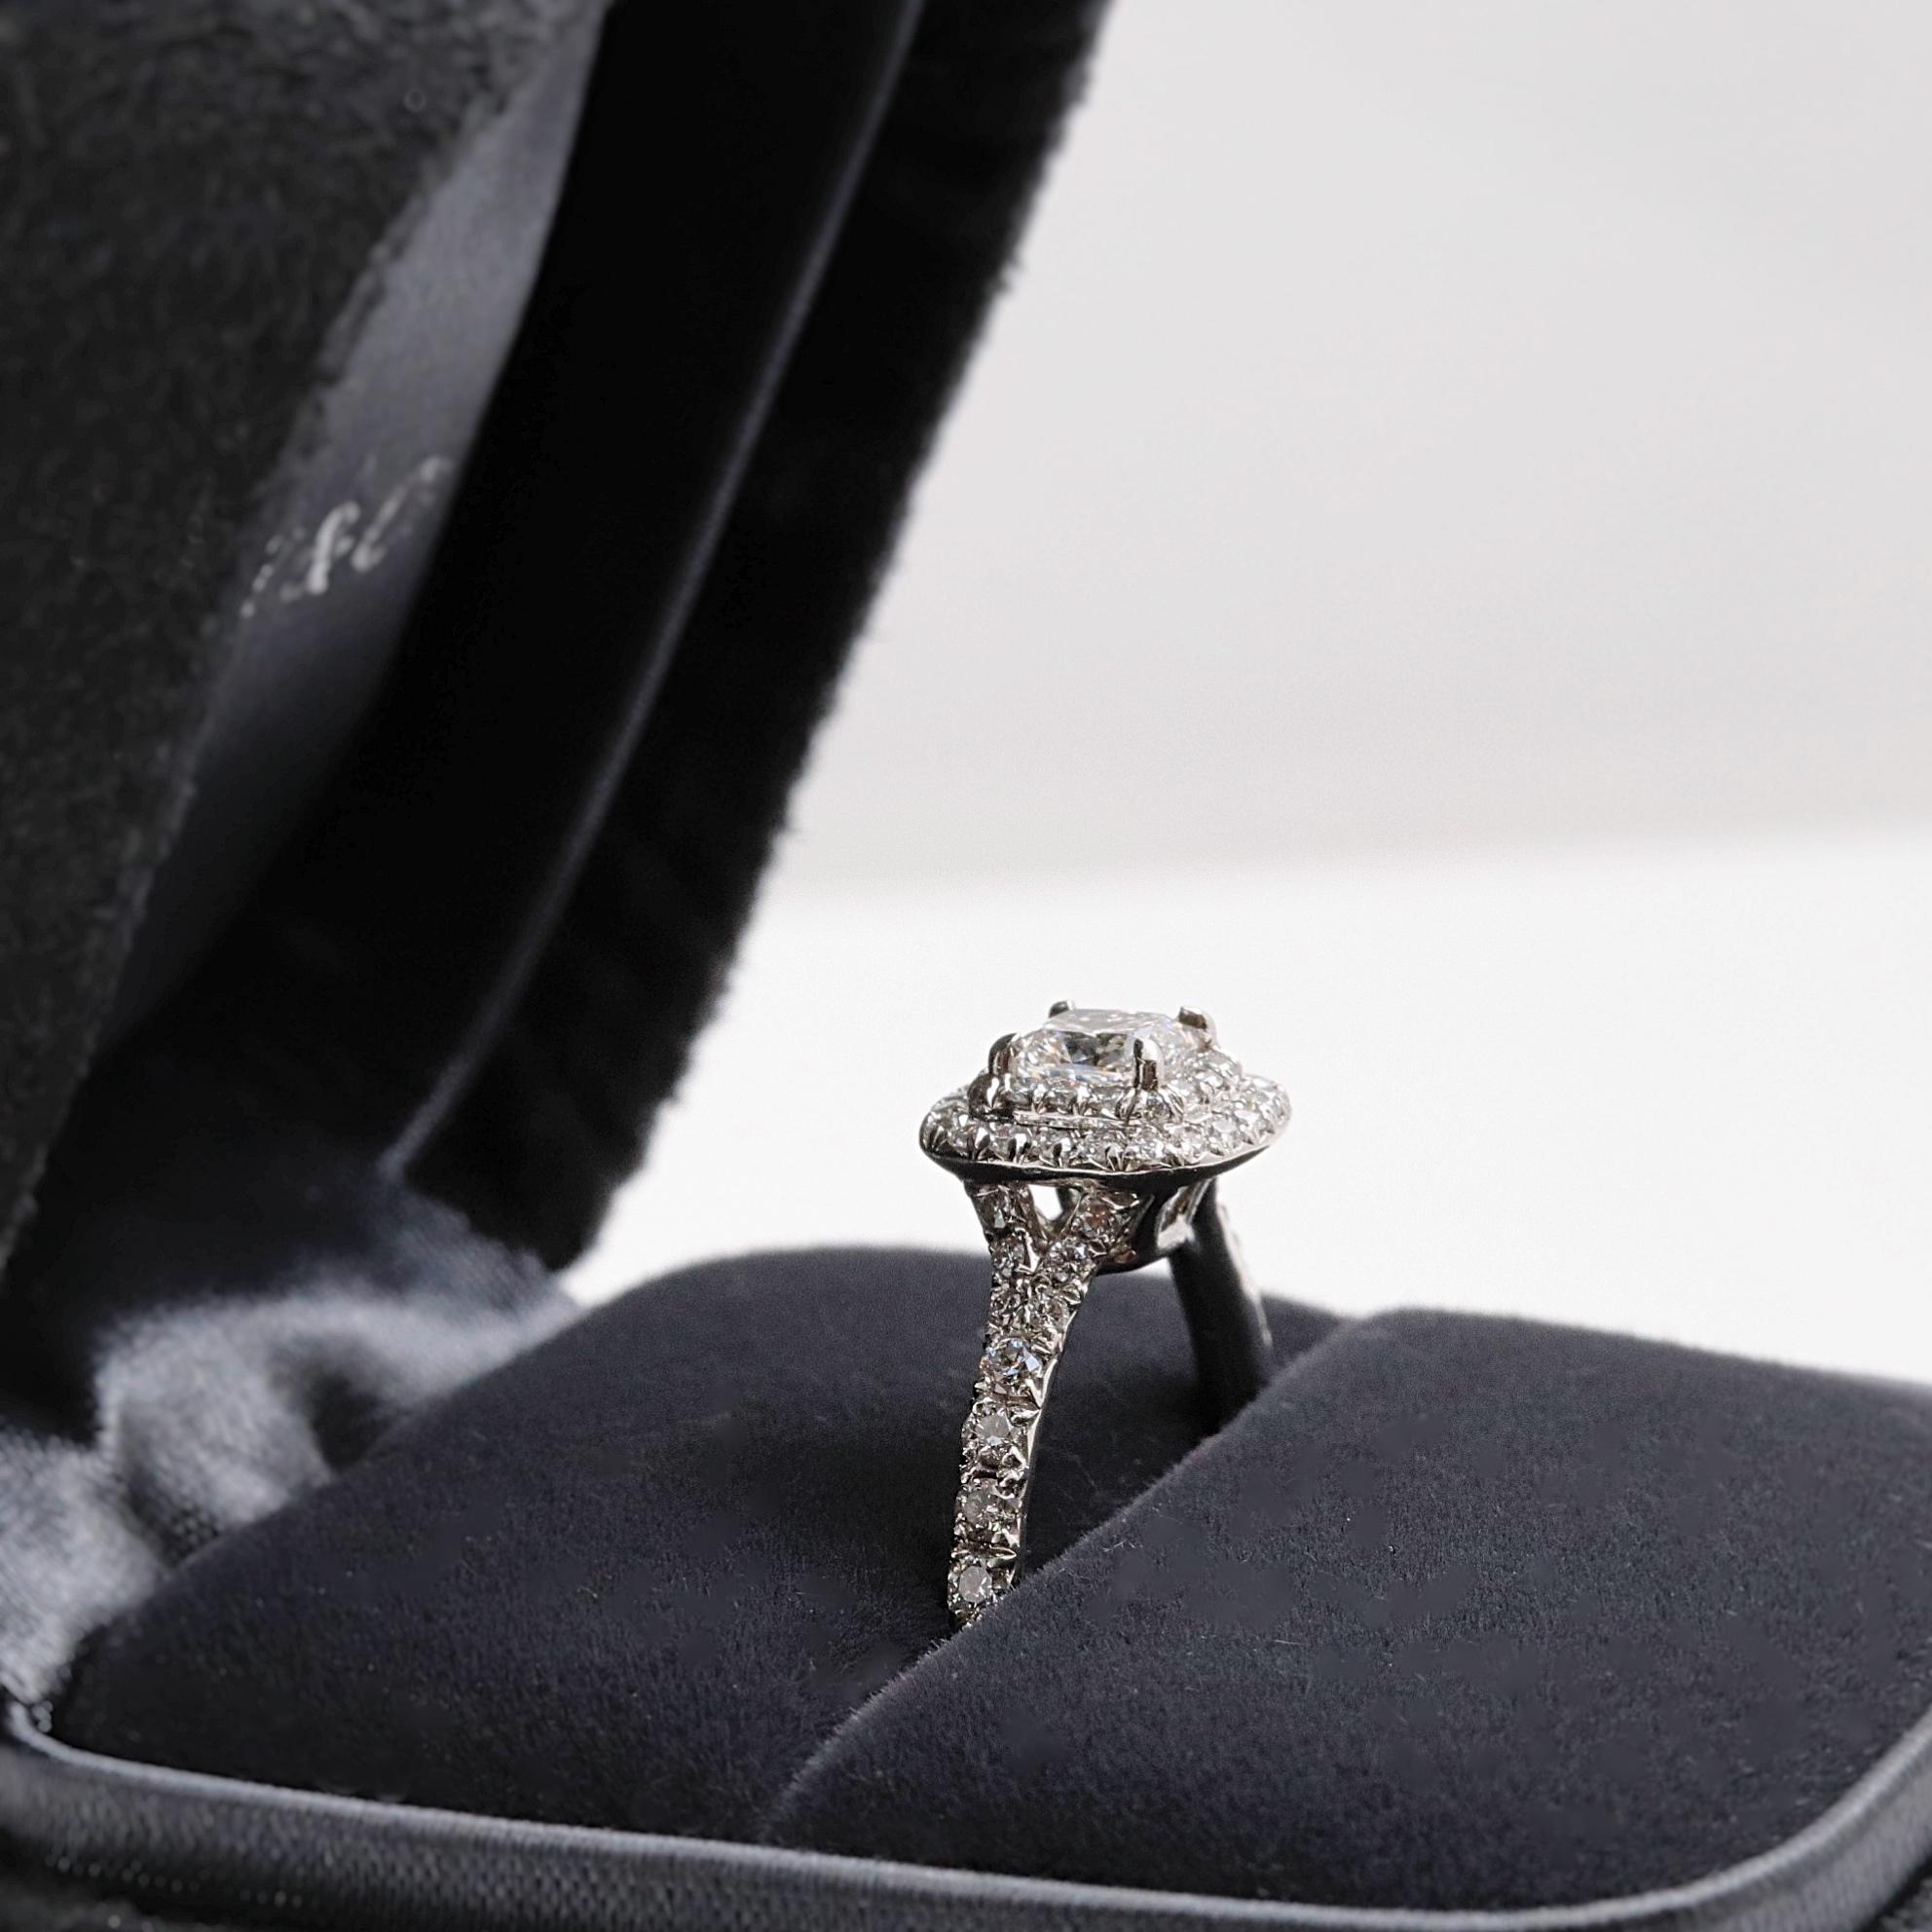 Tiffany & Co. Soleste Round Diamond 0.64 Carat Ring in Platinum Papers 2